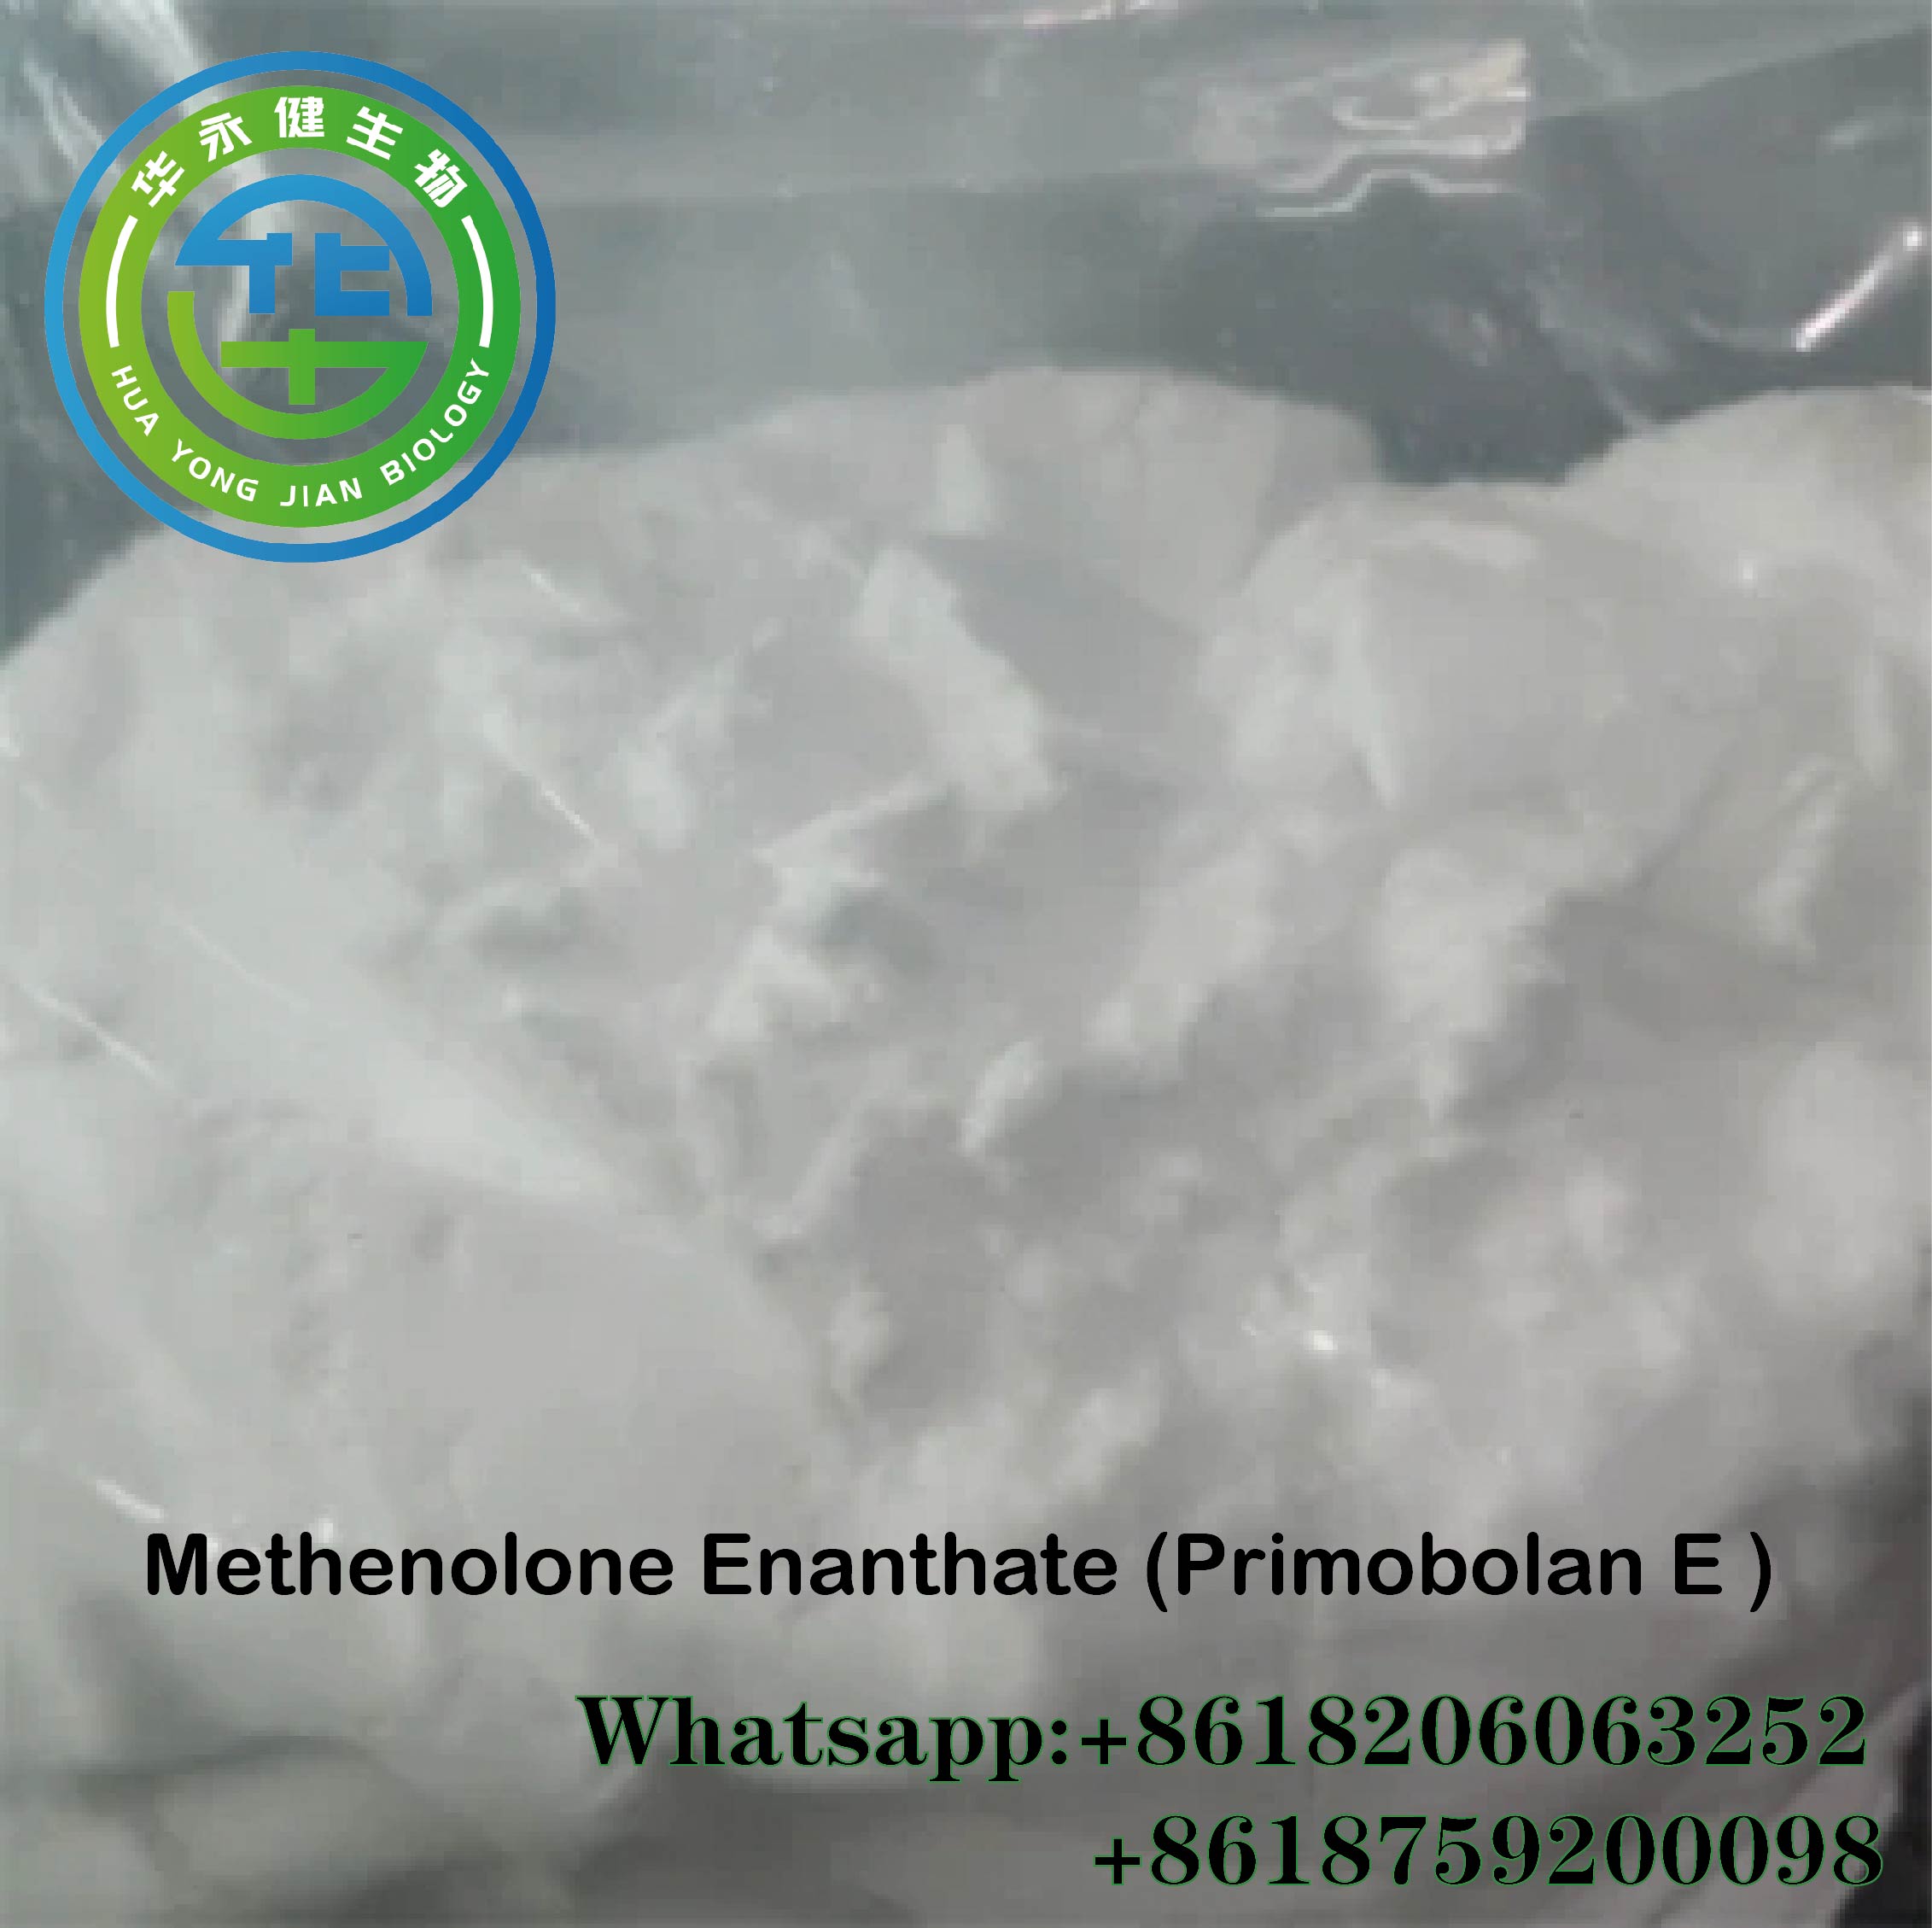 Primobolan Enanthate Effective Oral Primobolan Enanthate , 99% Purity Methenolone Enanthate Powder CasNO.303-42-4